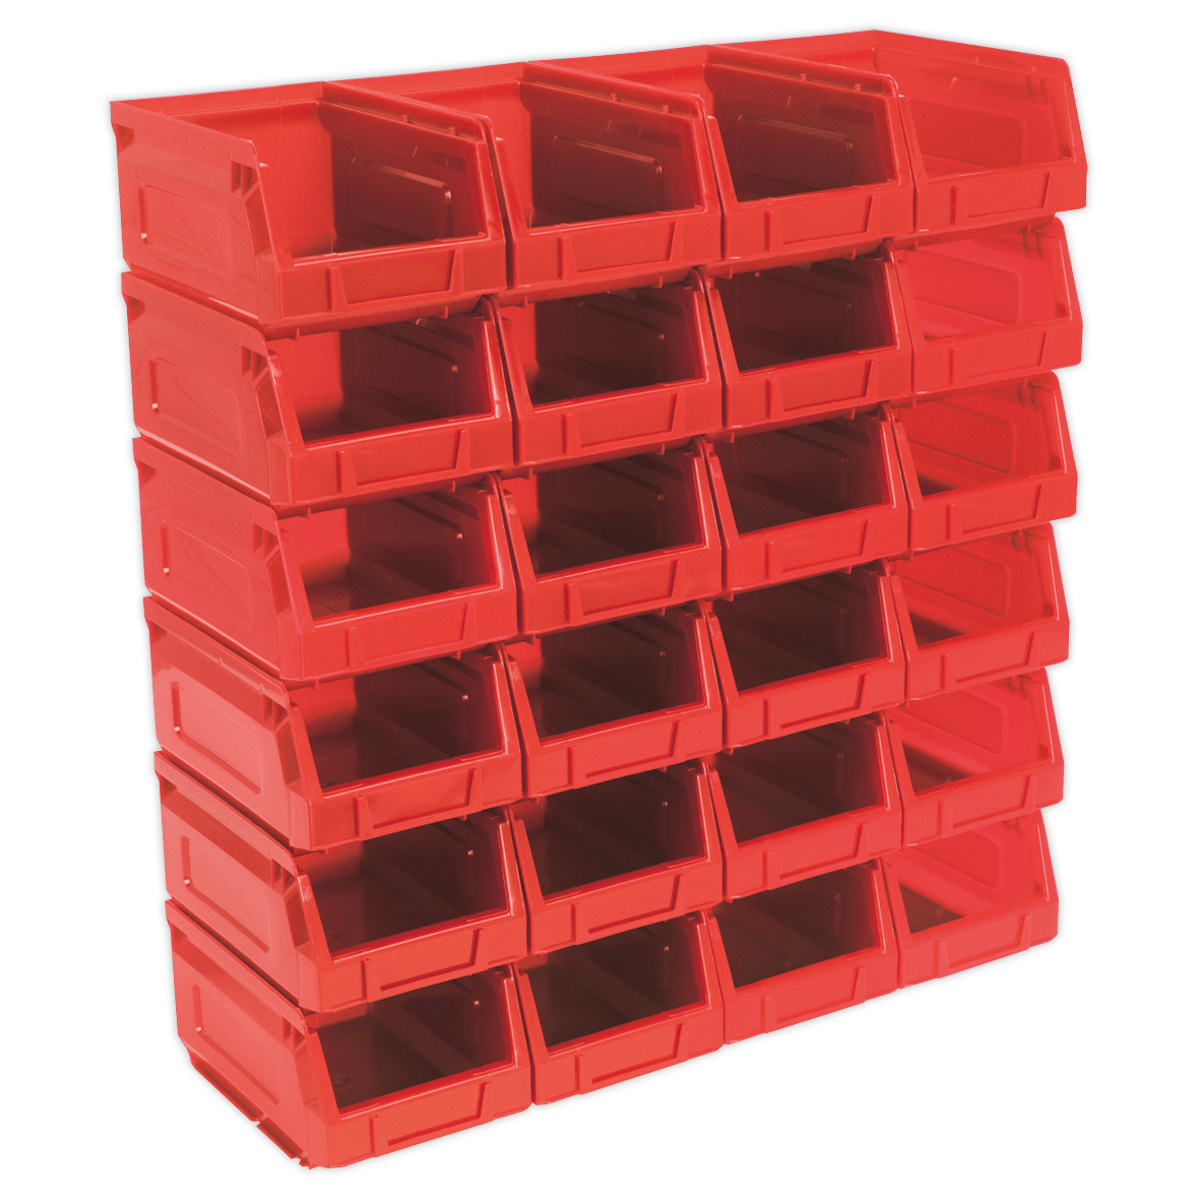 Sealey Plastic Storage Bin 105 x 165 x 85mm - Red Pack of 24